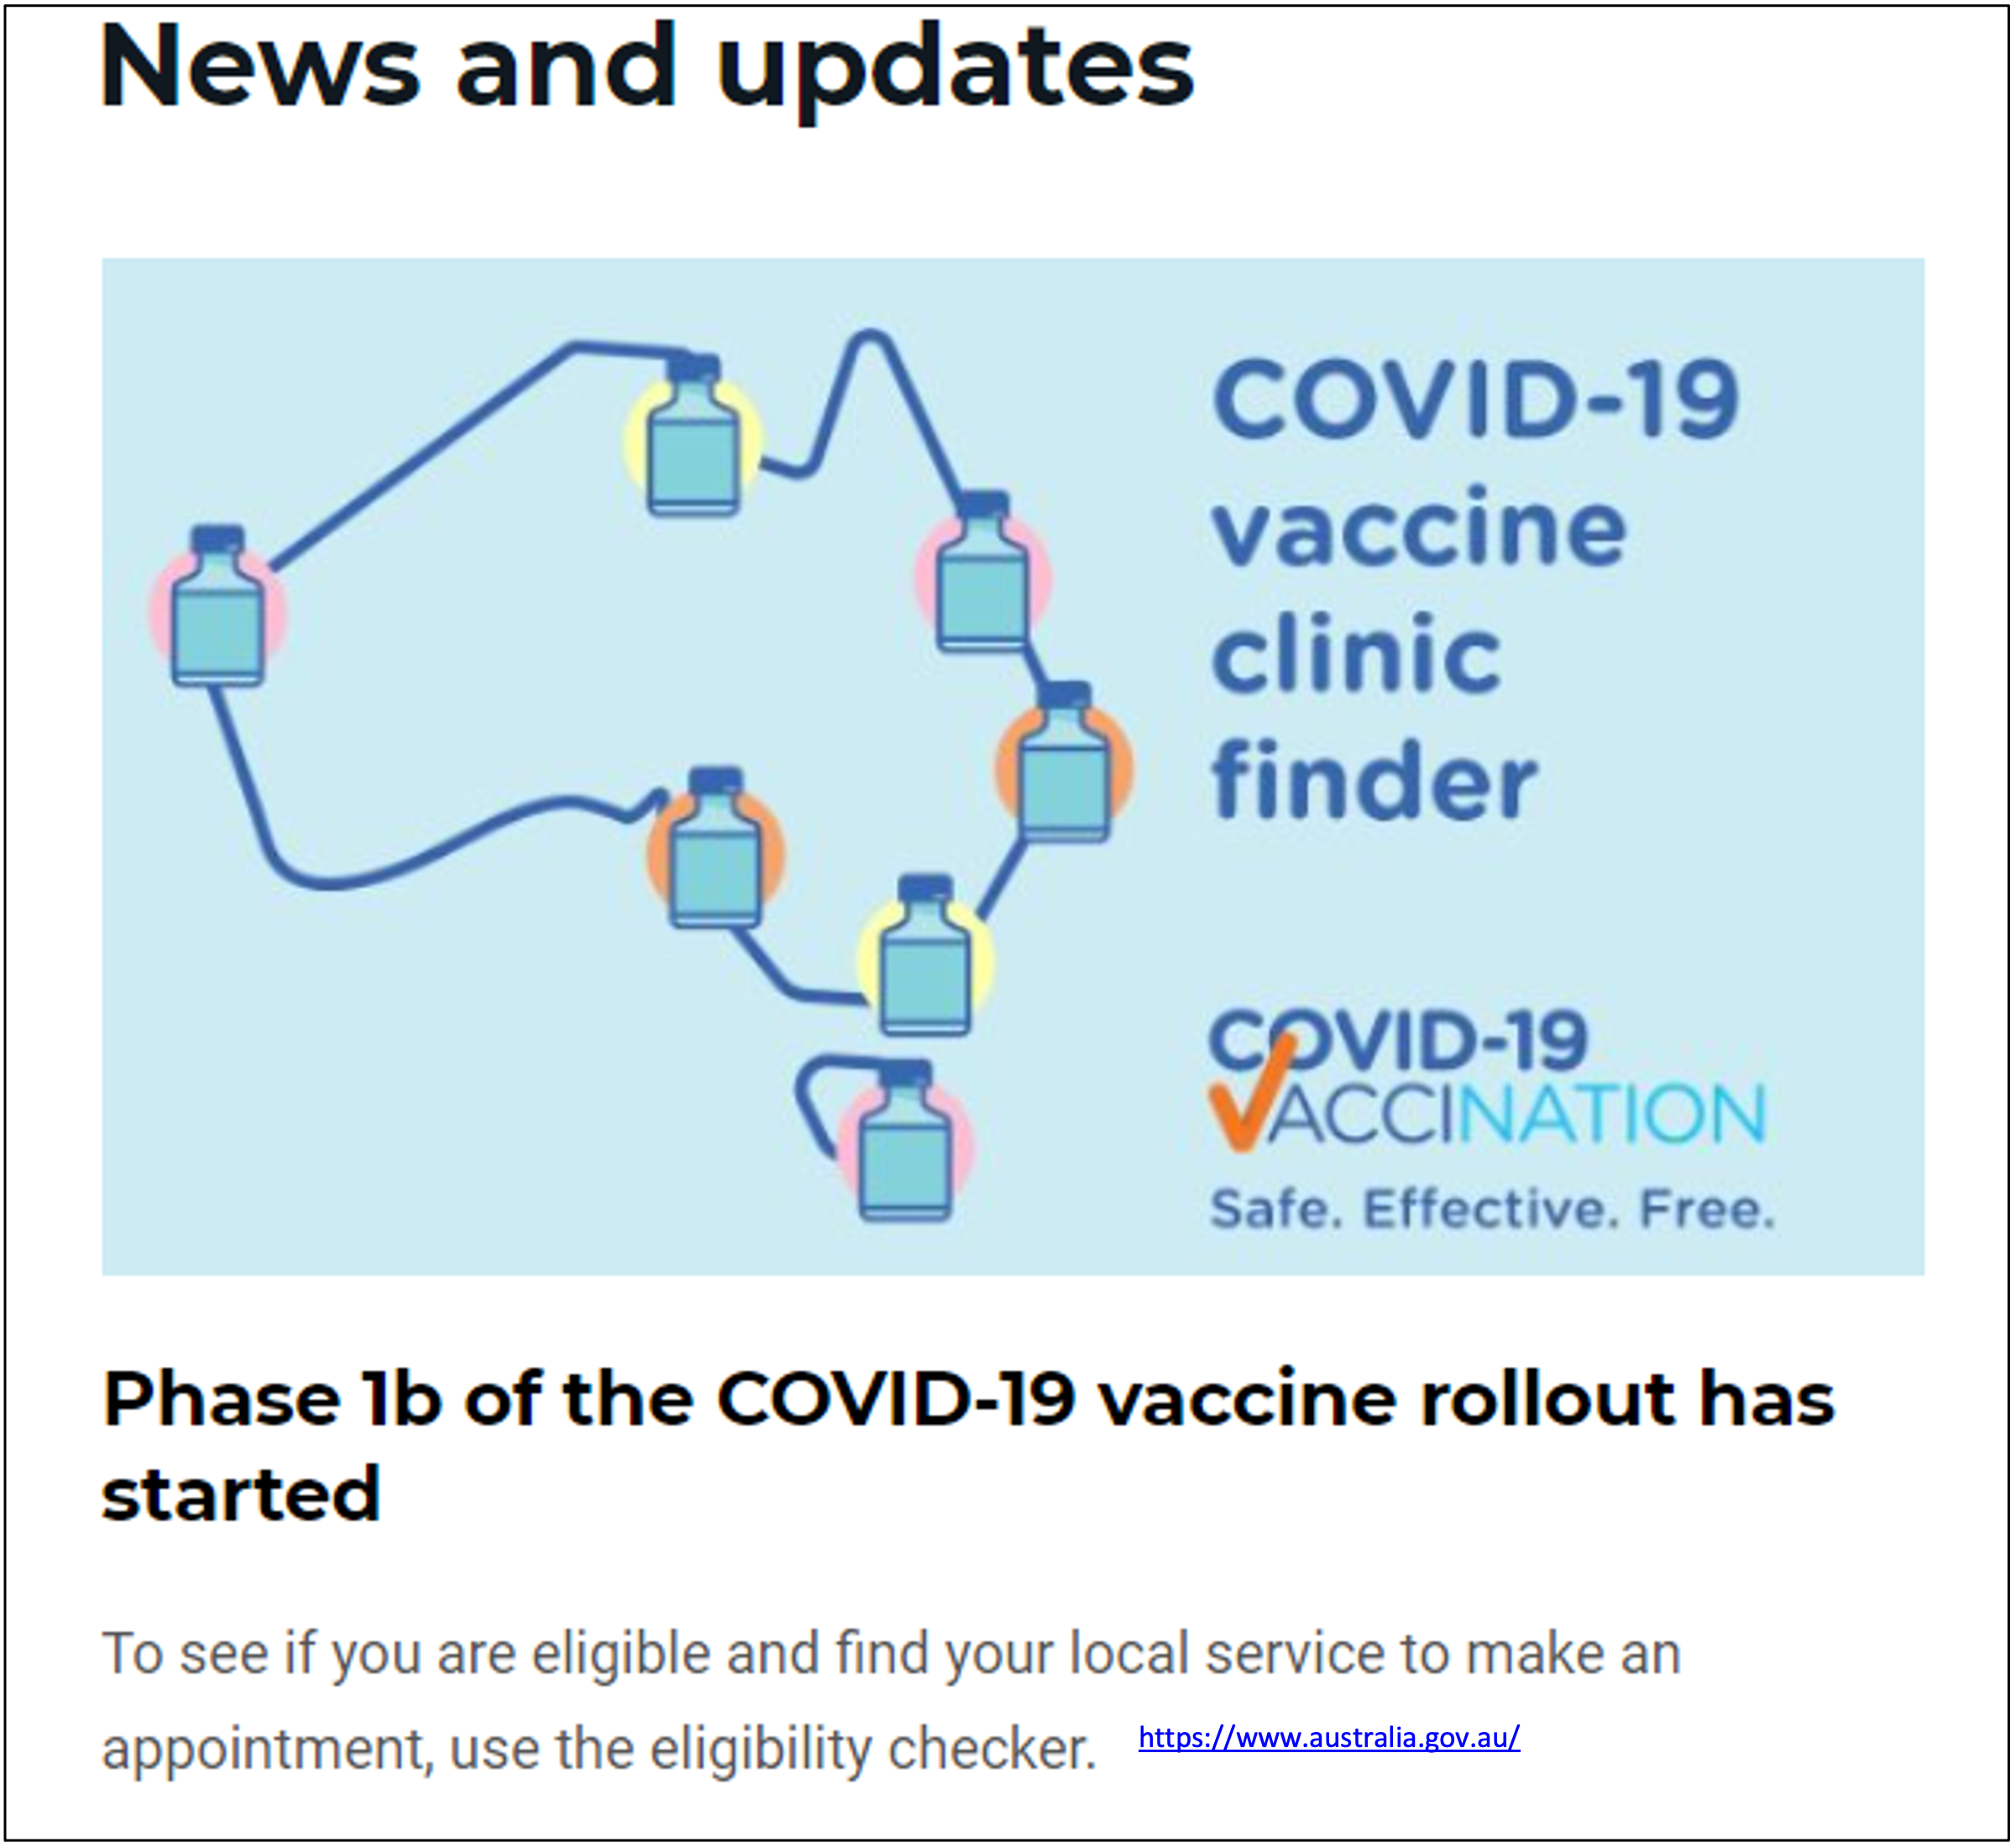 covid-19 vaccine finder website